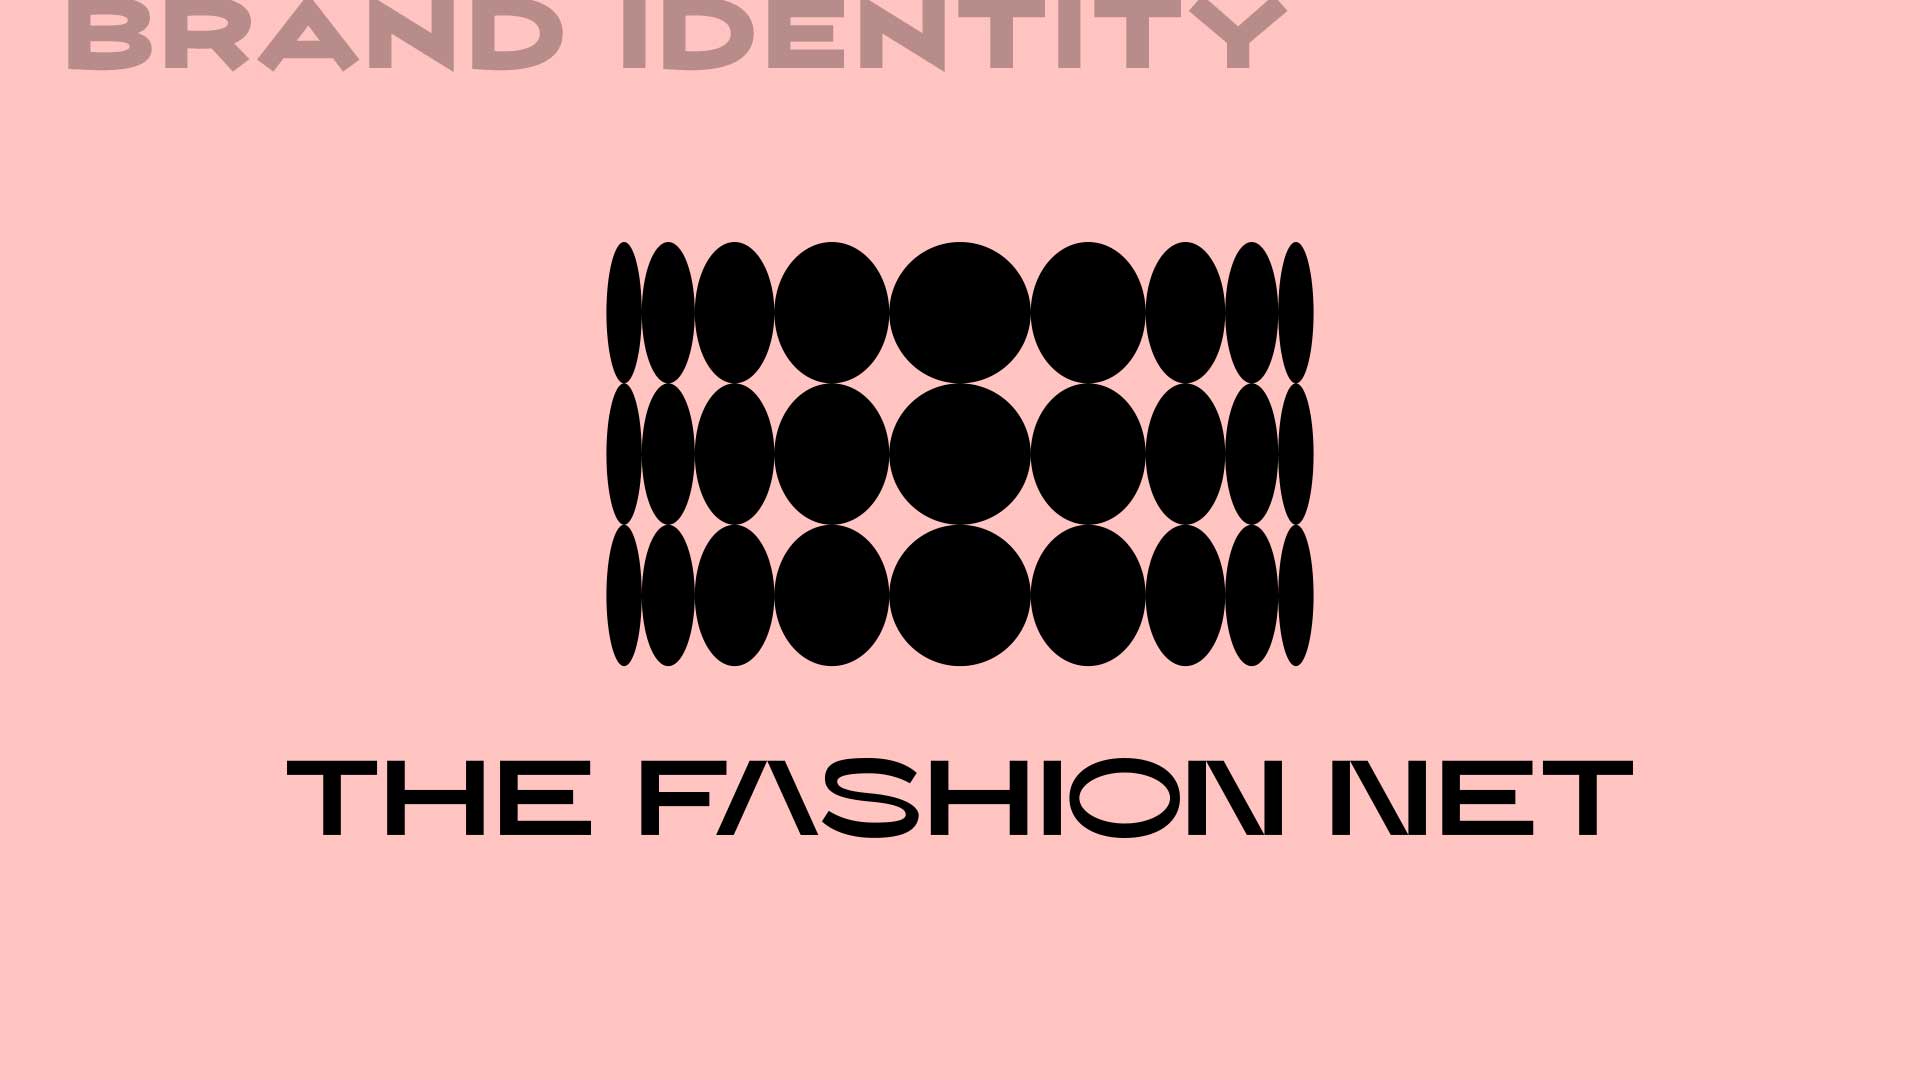 The Fashion Net Brand Identity